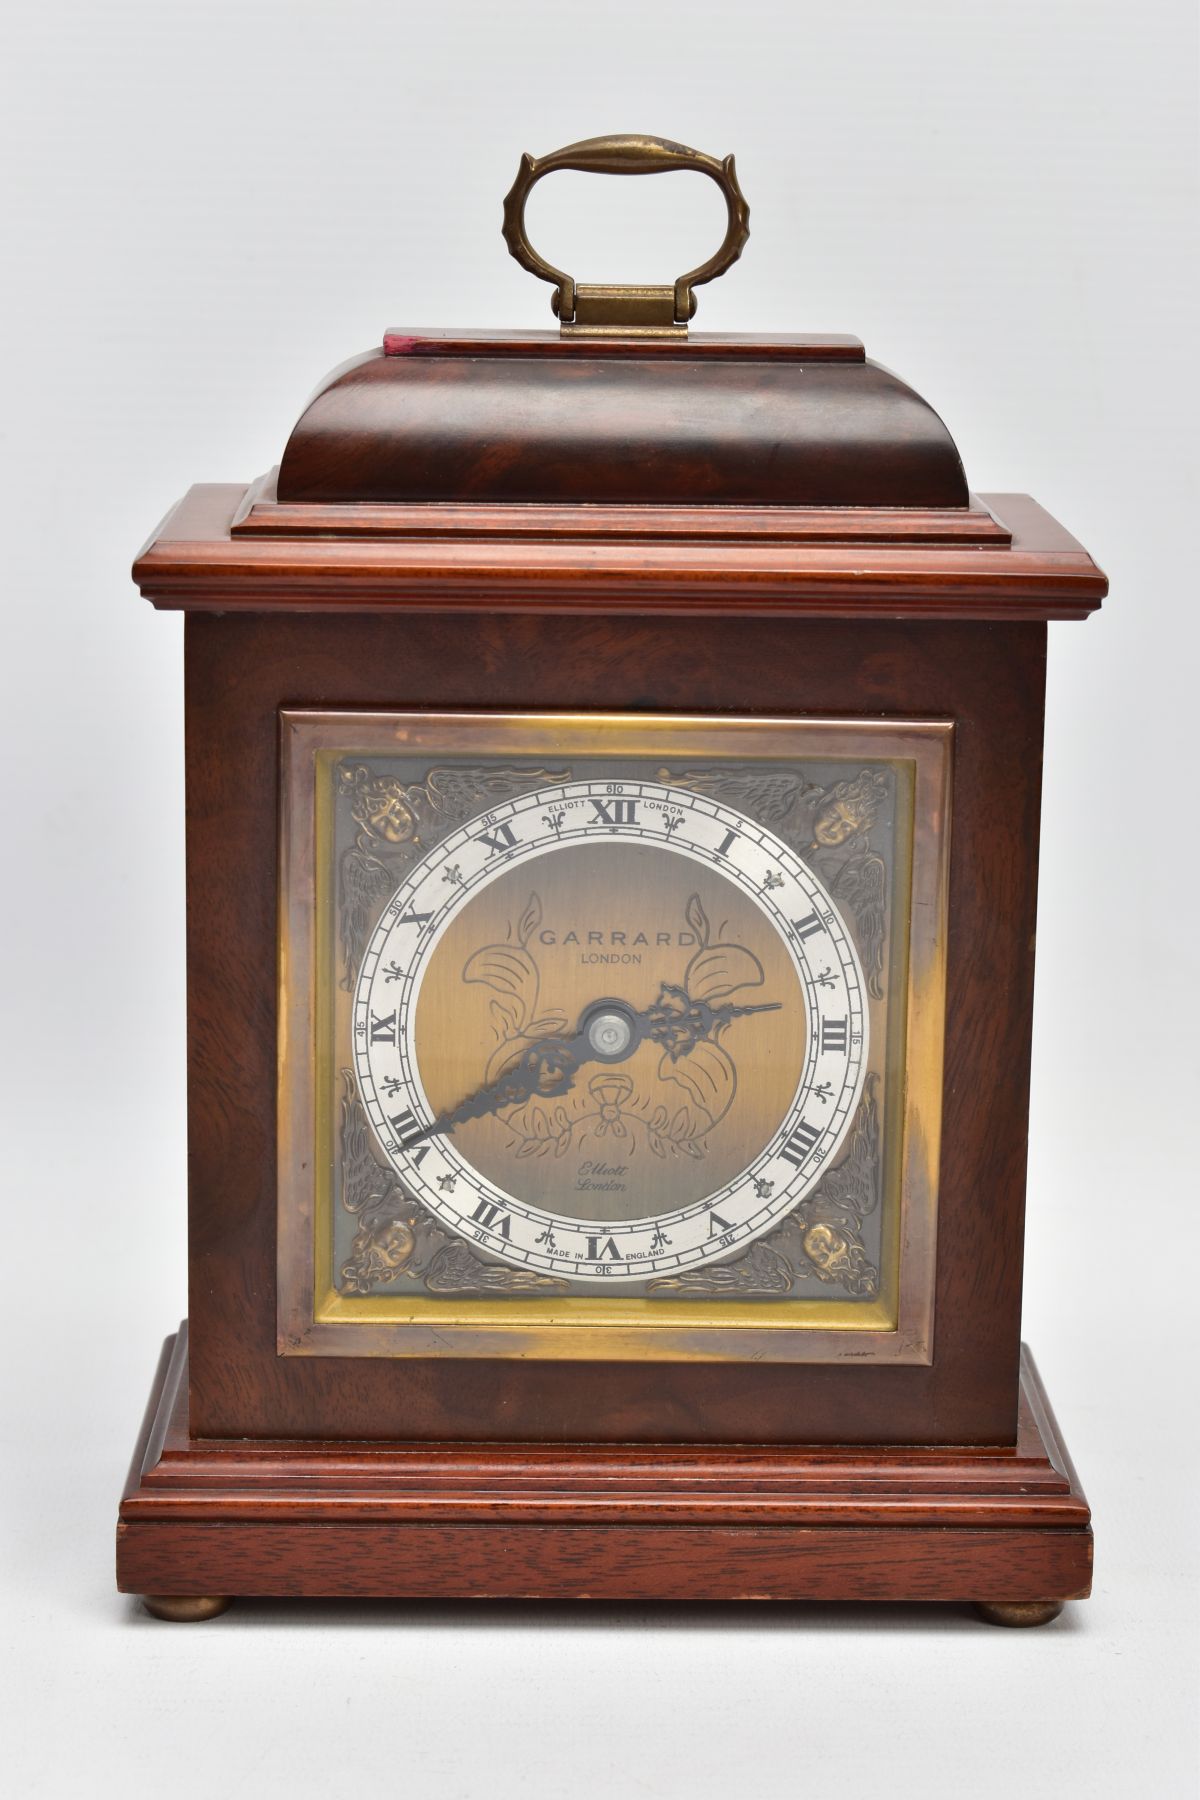 A BURR WOOD CASED GARRARD MANTLE CLOCK, London Elliott mantel clock the silvered ring set with Roman